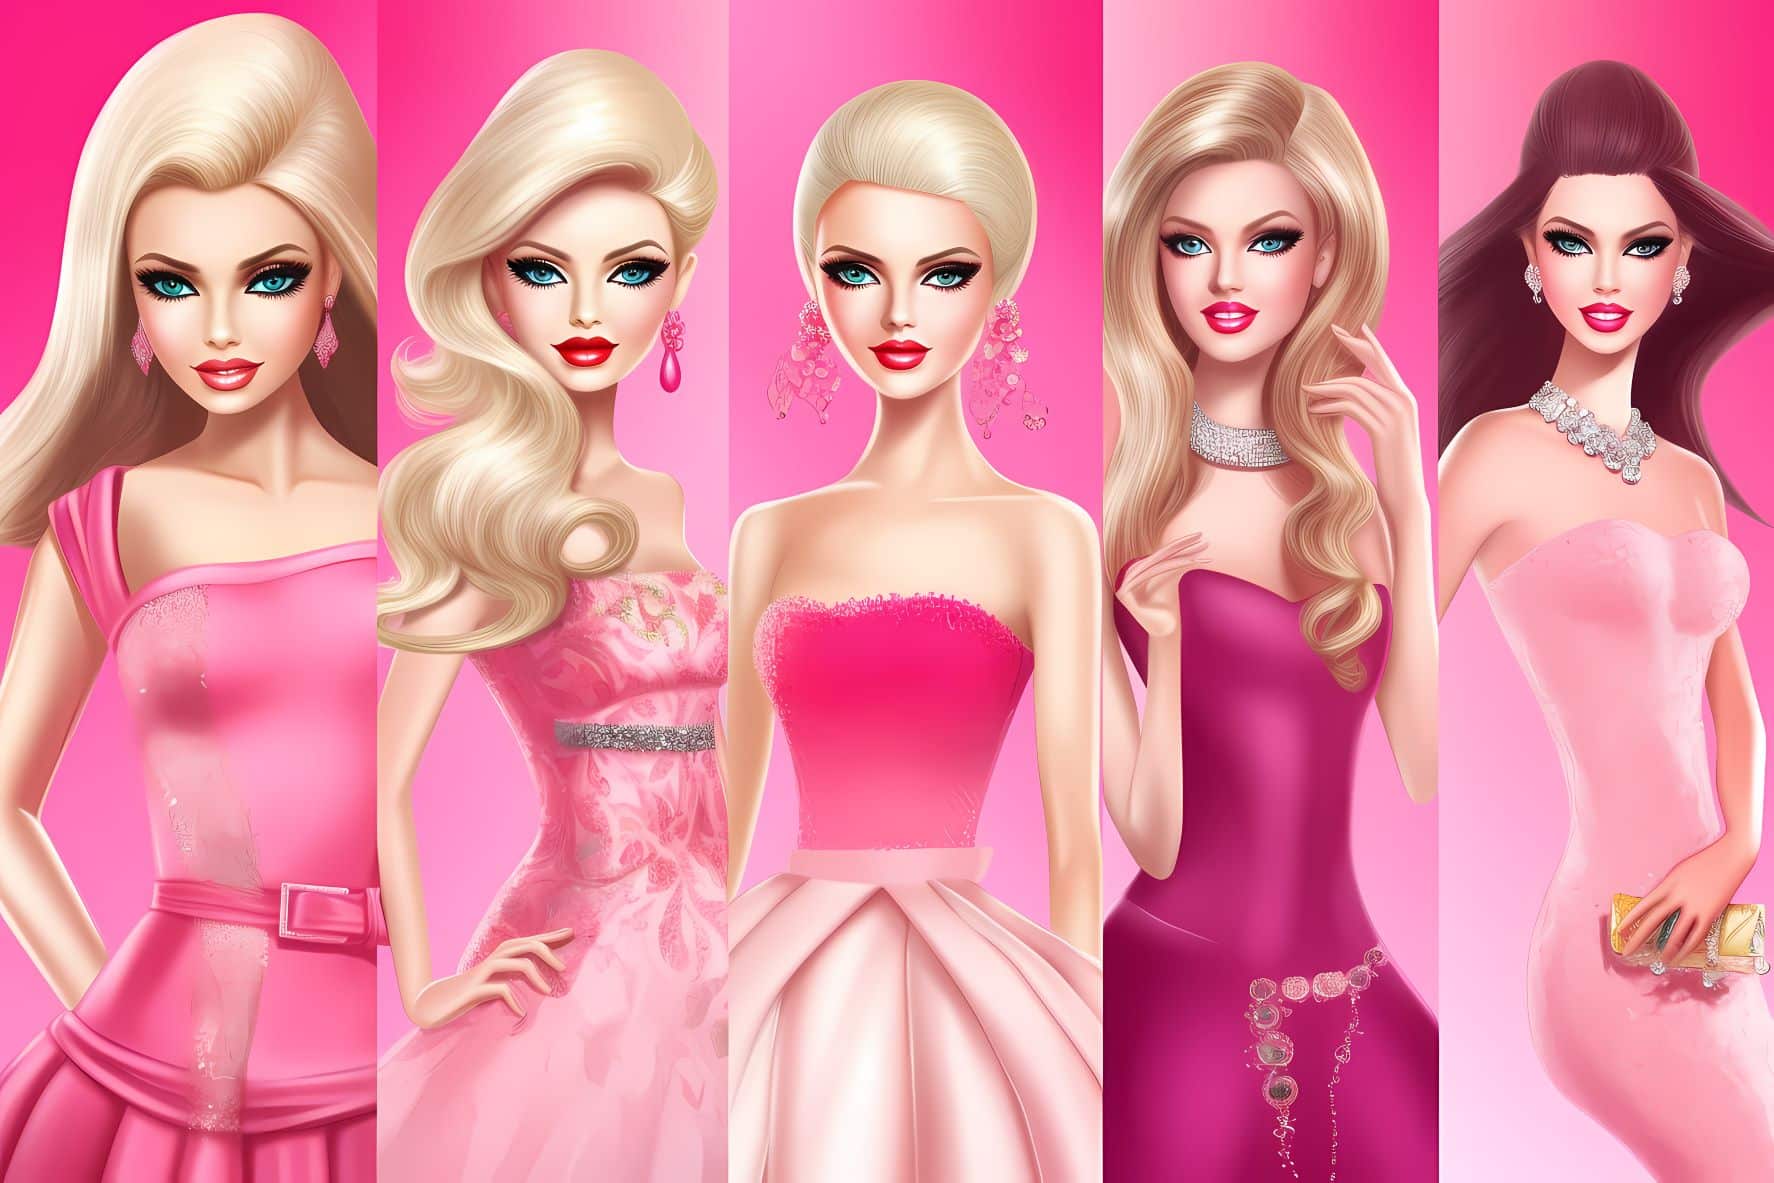 Halloween Barbie Phenomenon: A Billion-Dollar Inspiration